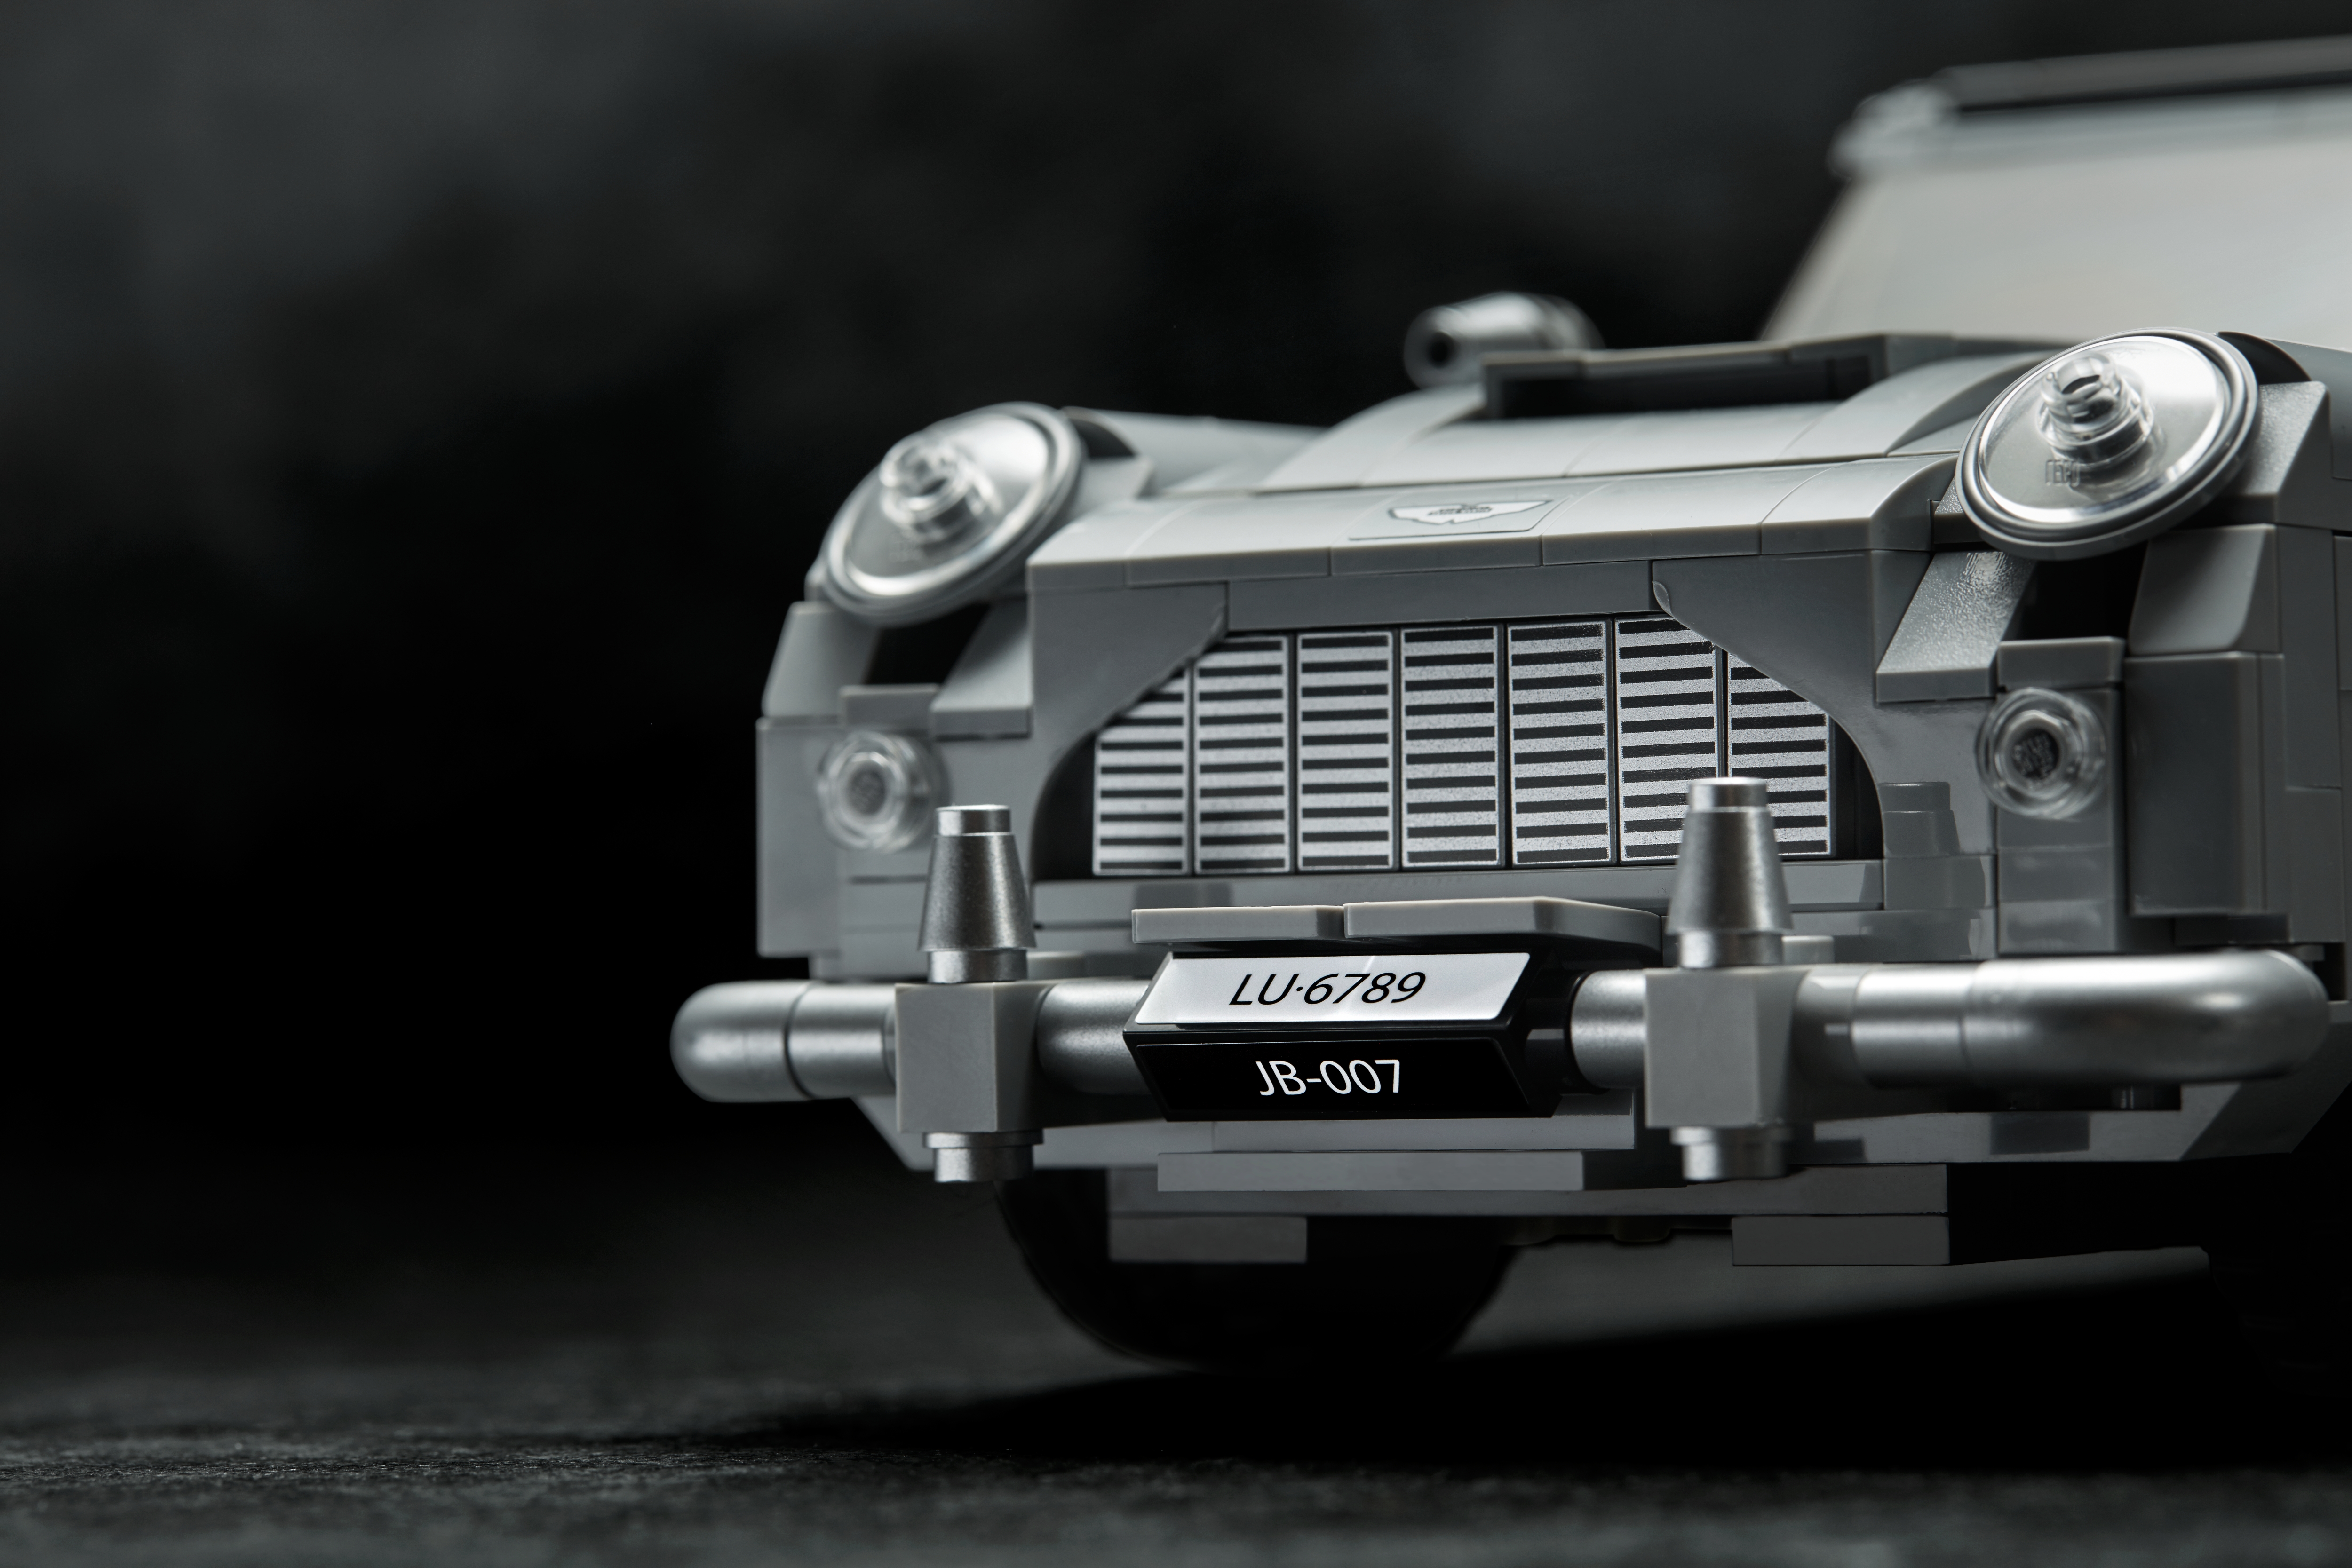 1295 Pieces LEGO Creator Expert James Bond Aston Martin DB5 10262 Building Kit 